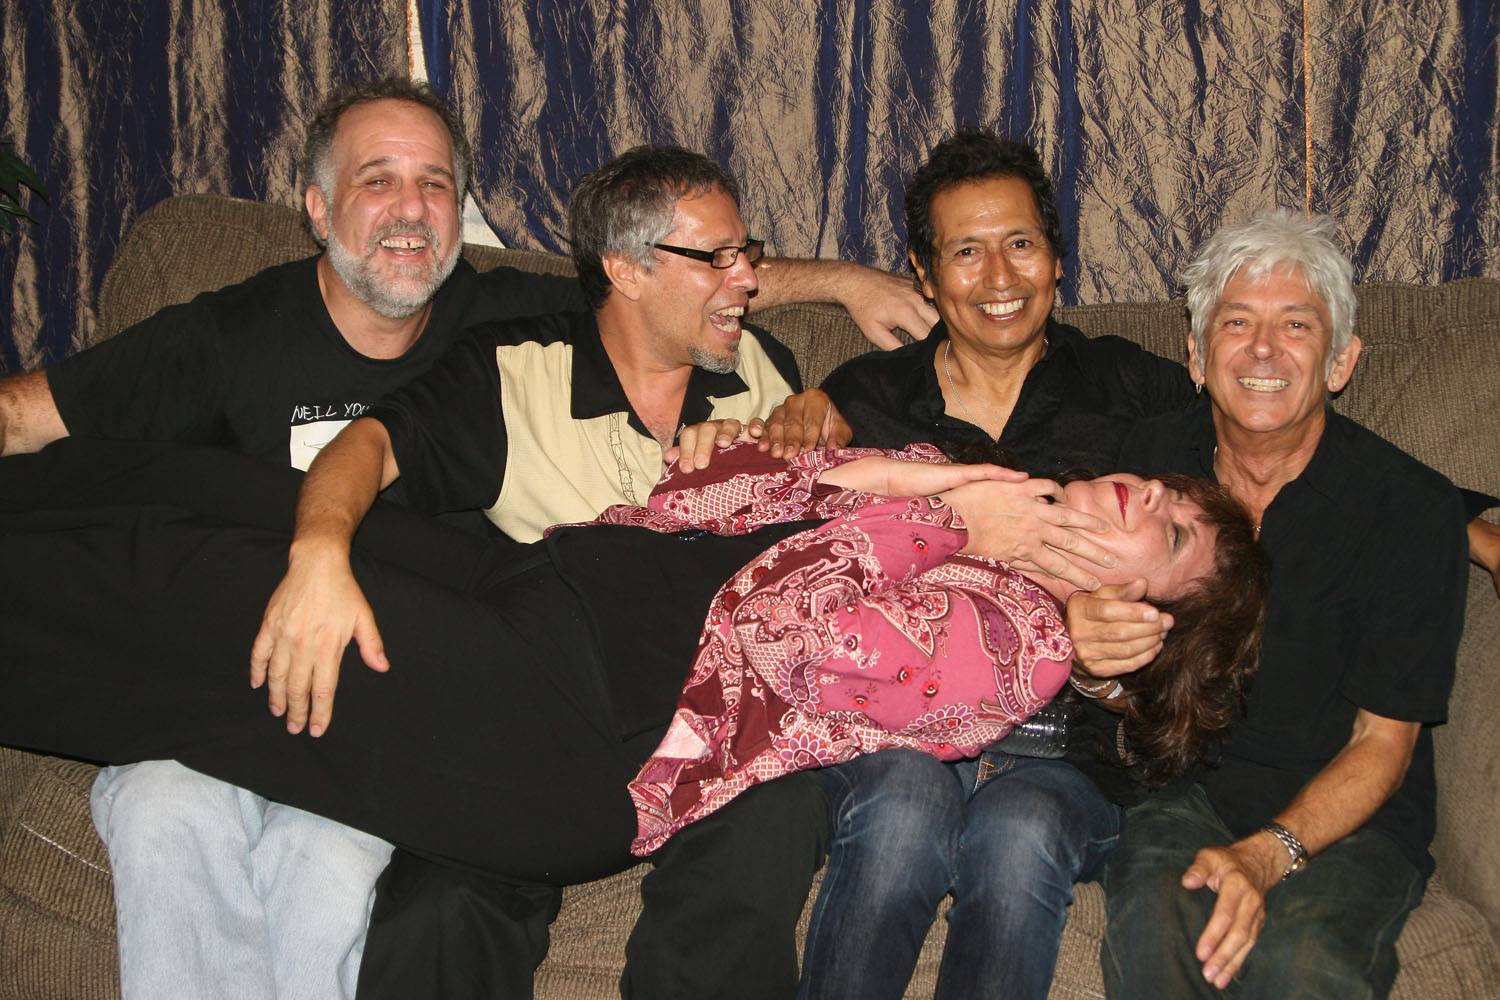 Jody Denberg, Don Harvey, Alejandro Escovedo, me and Ian ‘Mac’ McLagan at Antone’s for The Austin Child Guidance Benefit.